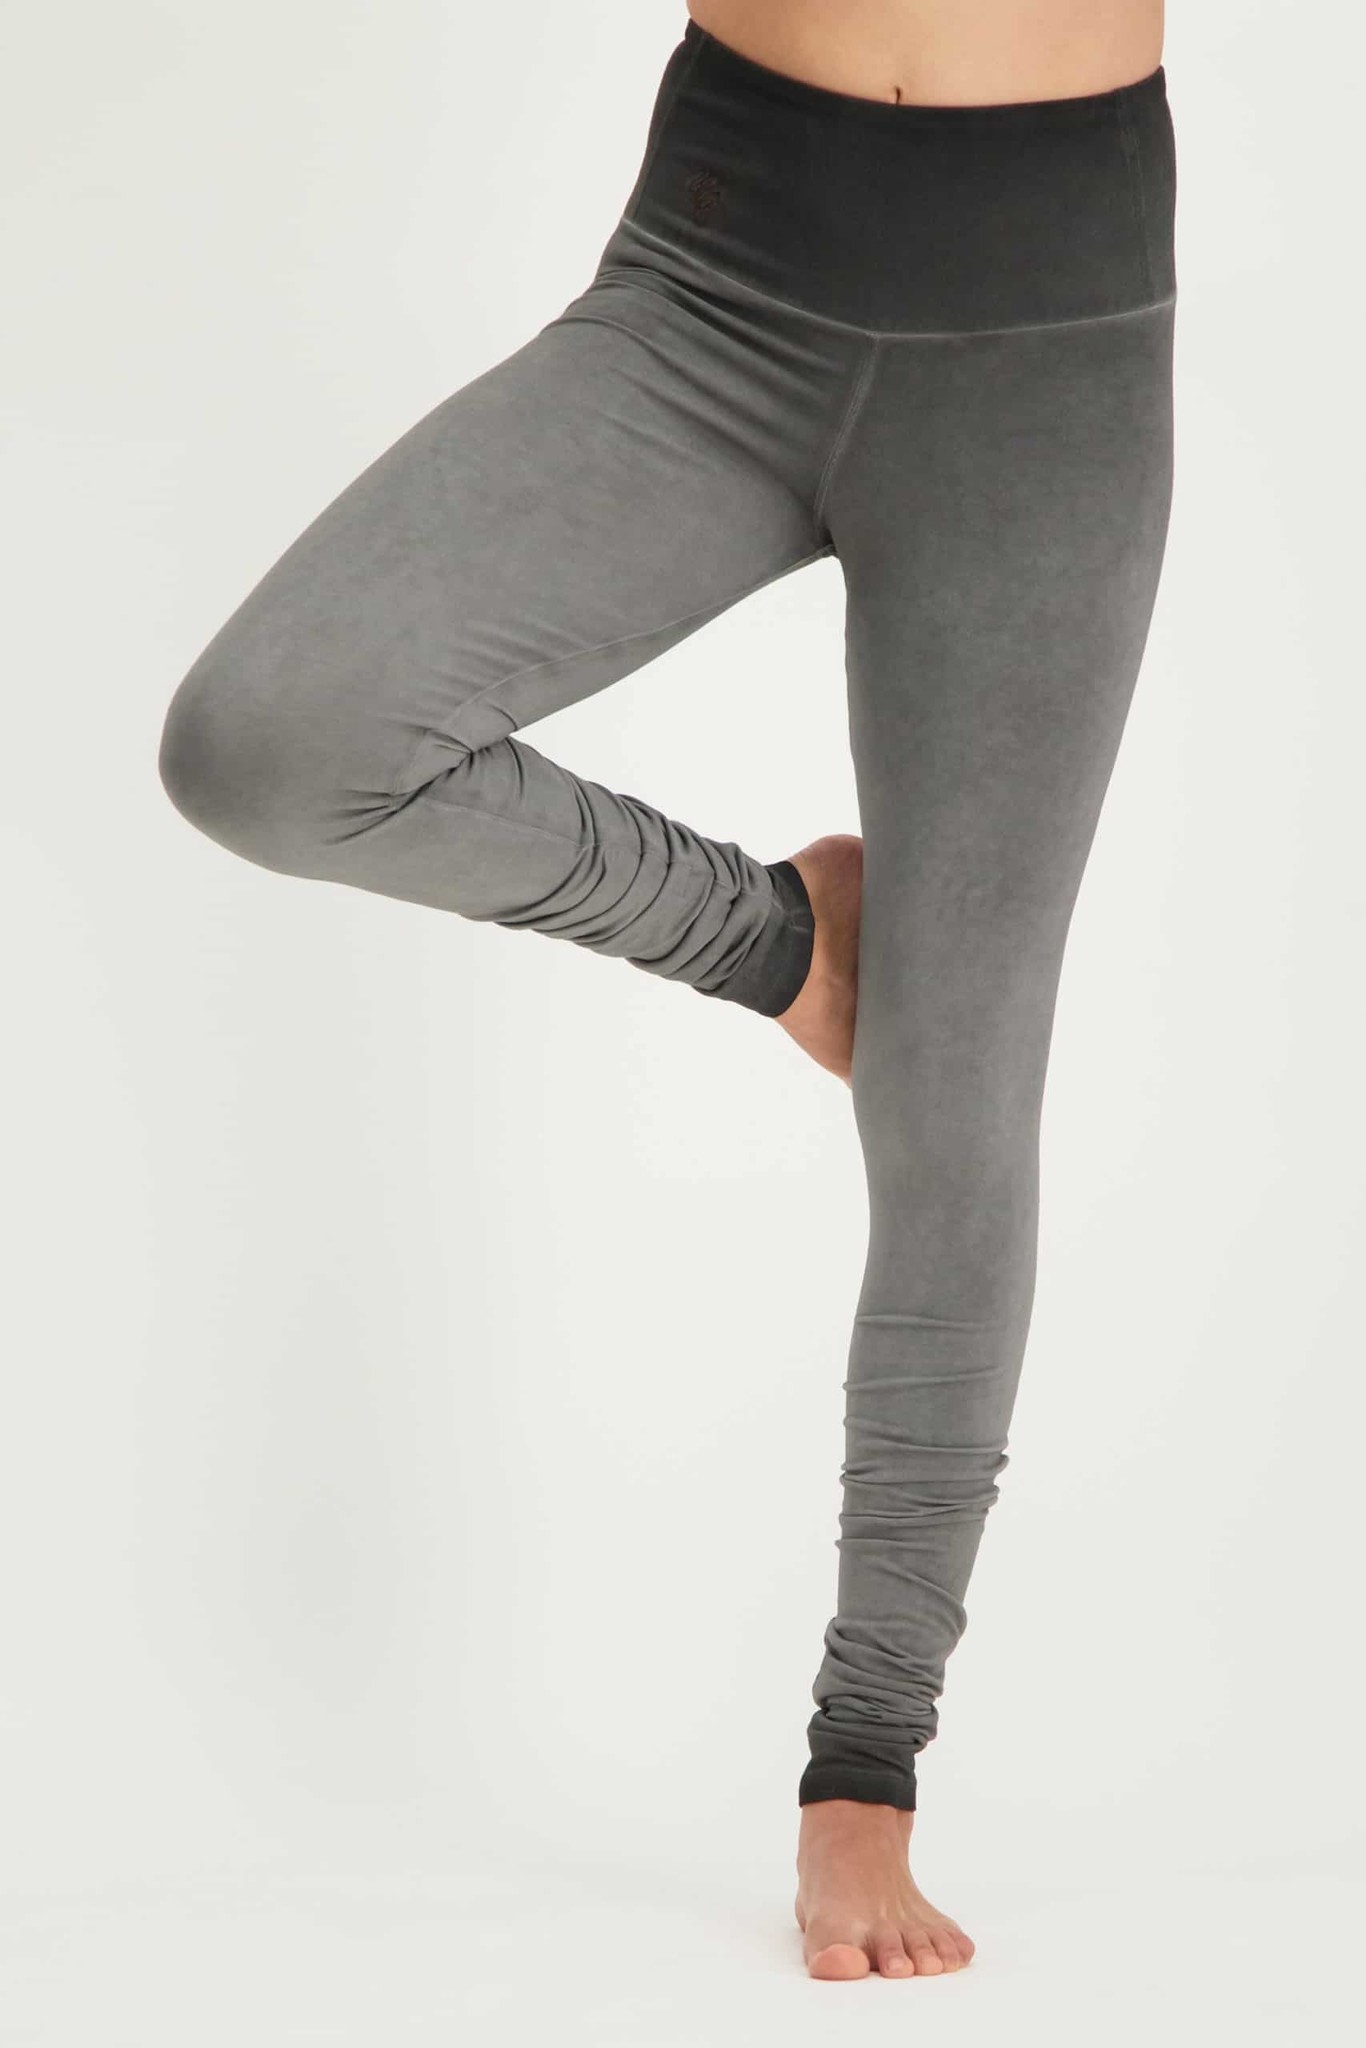 Urban Goddess Gaia Yoga Legging - Off Black - Yogisha Amsterdam